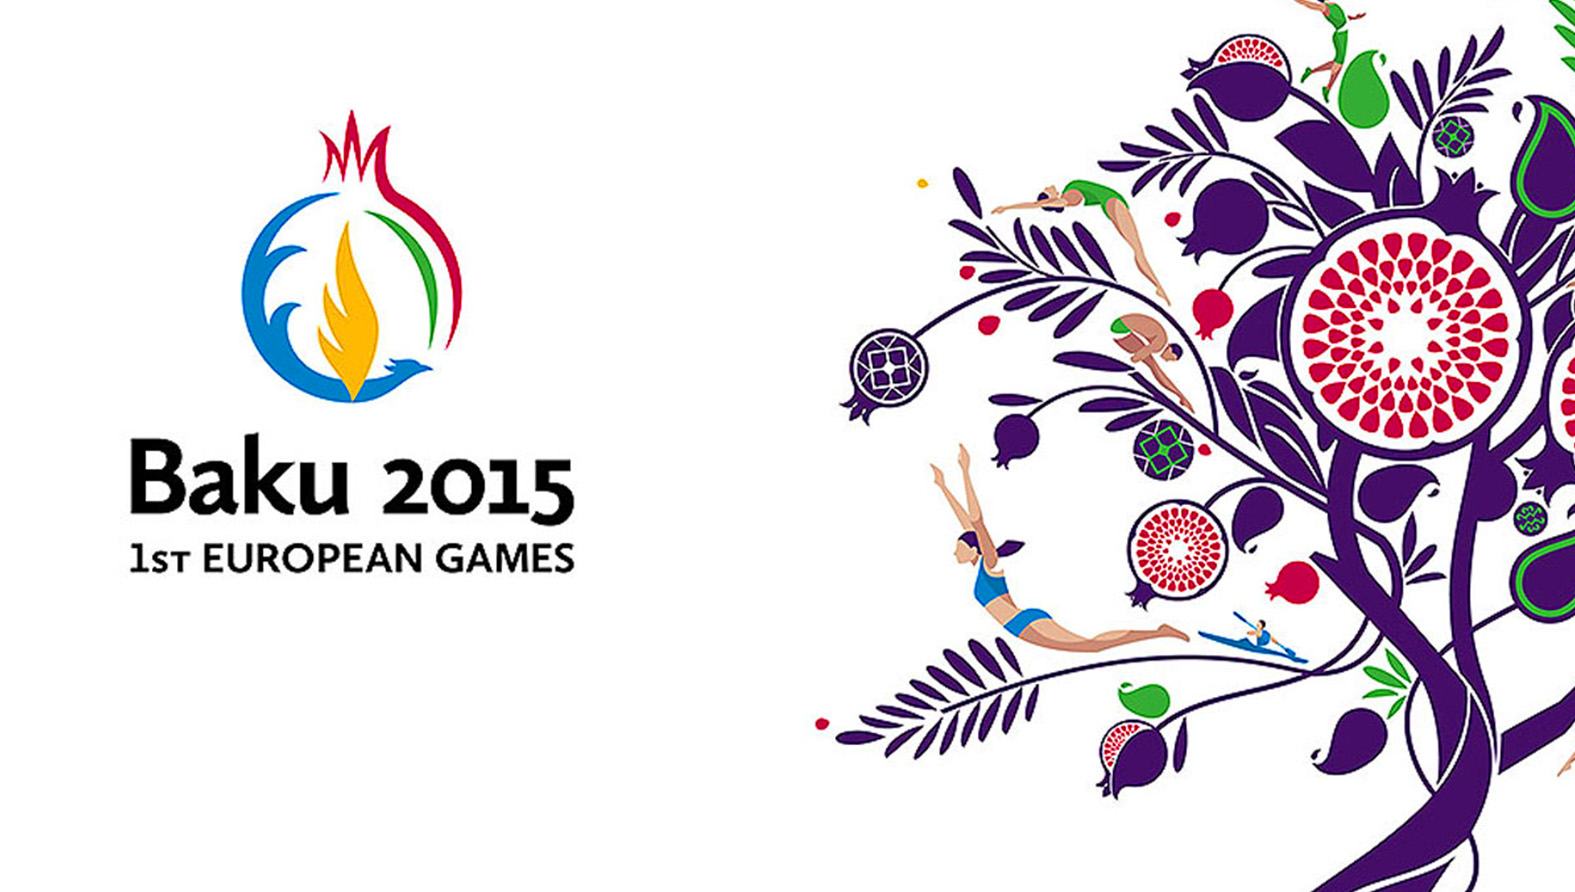 QUALIFICATION FOR BAKU 2015 EUROPEAN GAMES